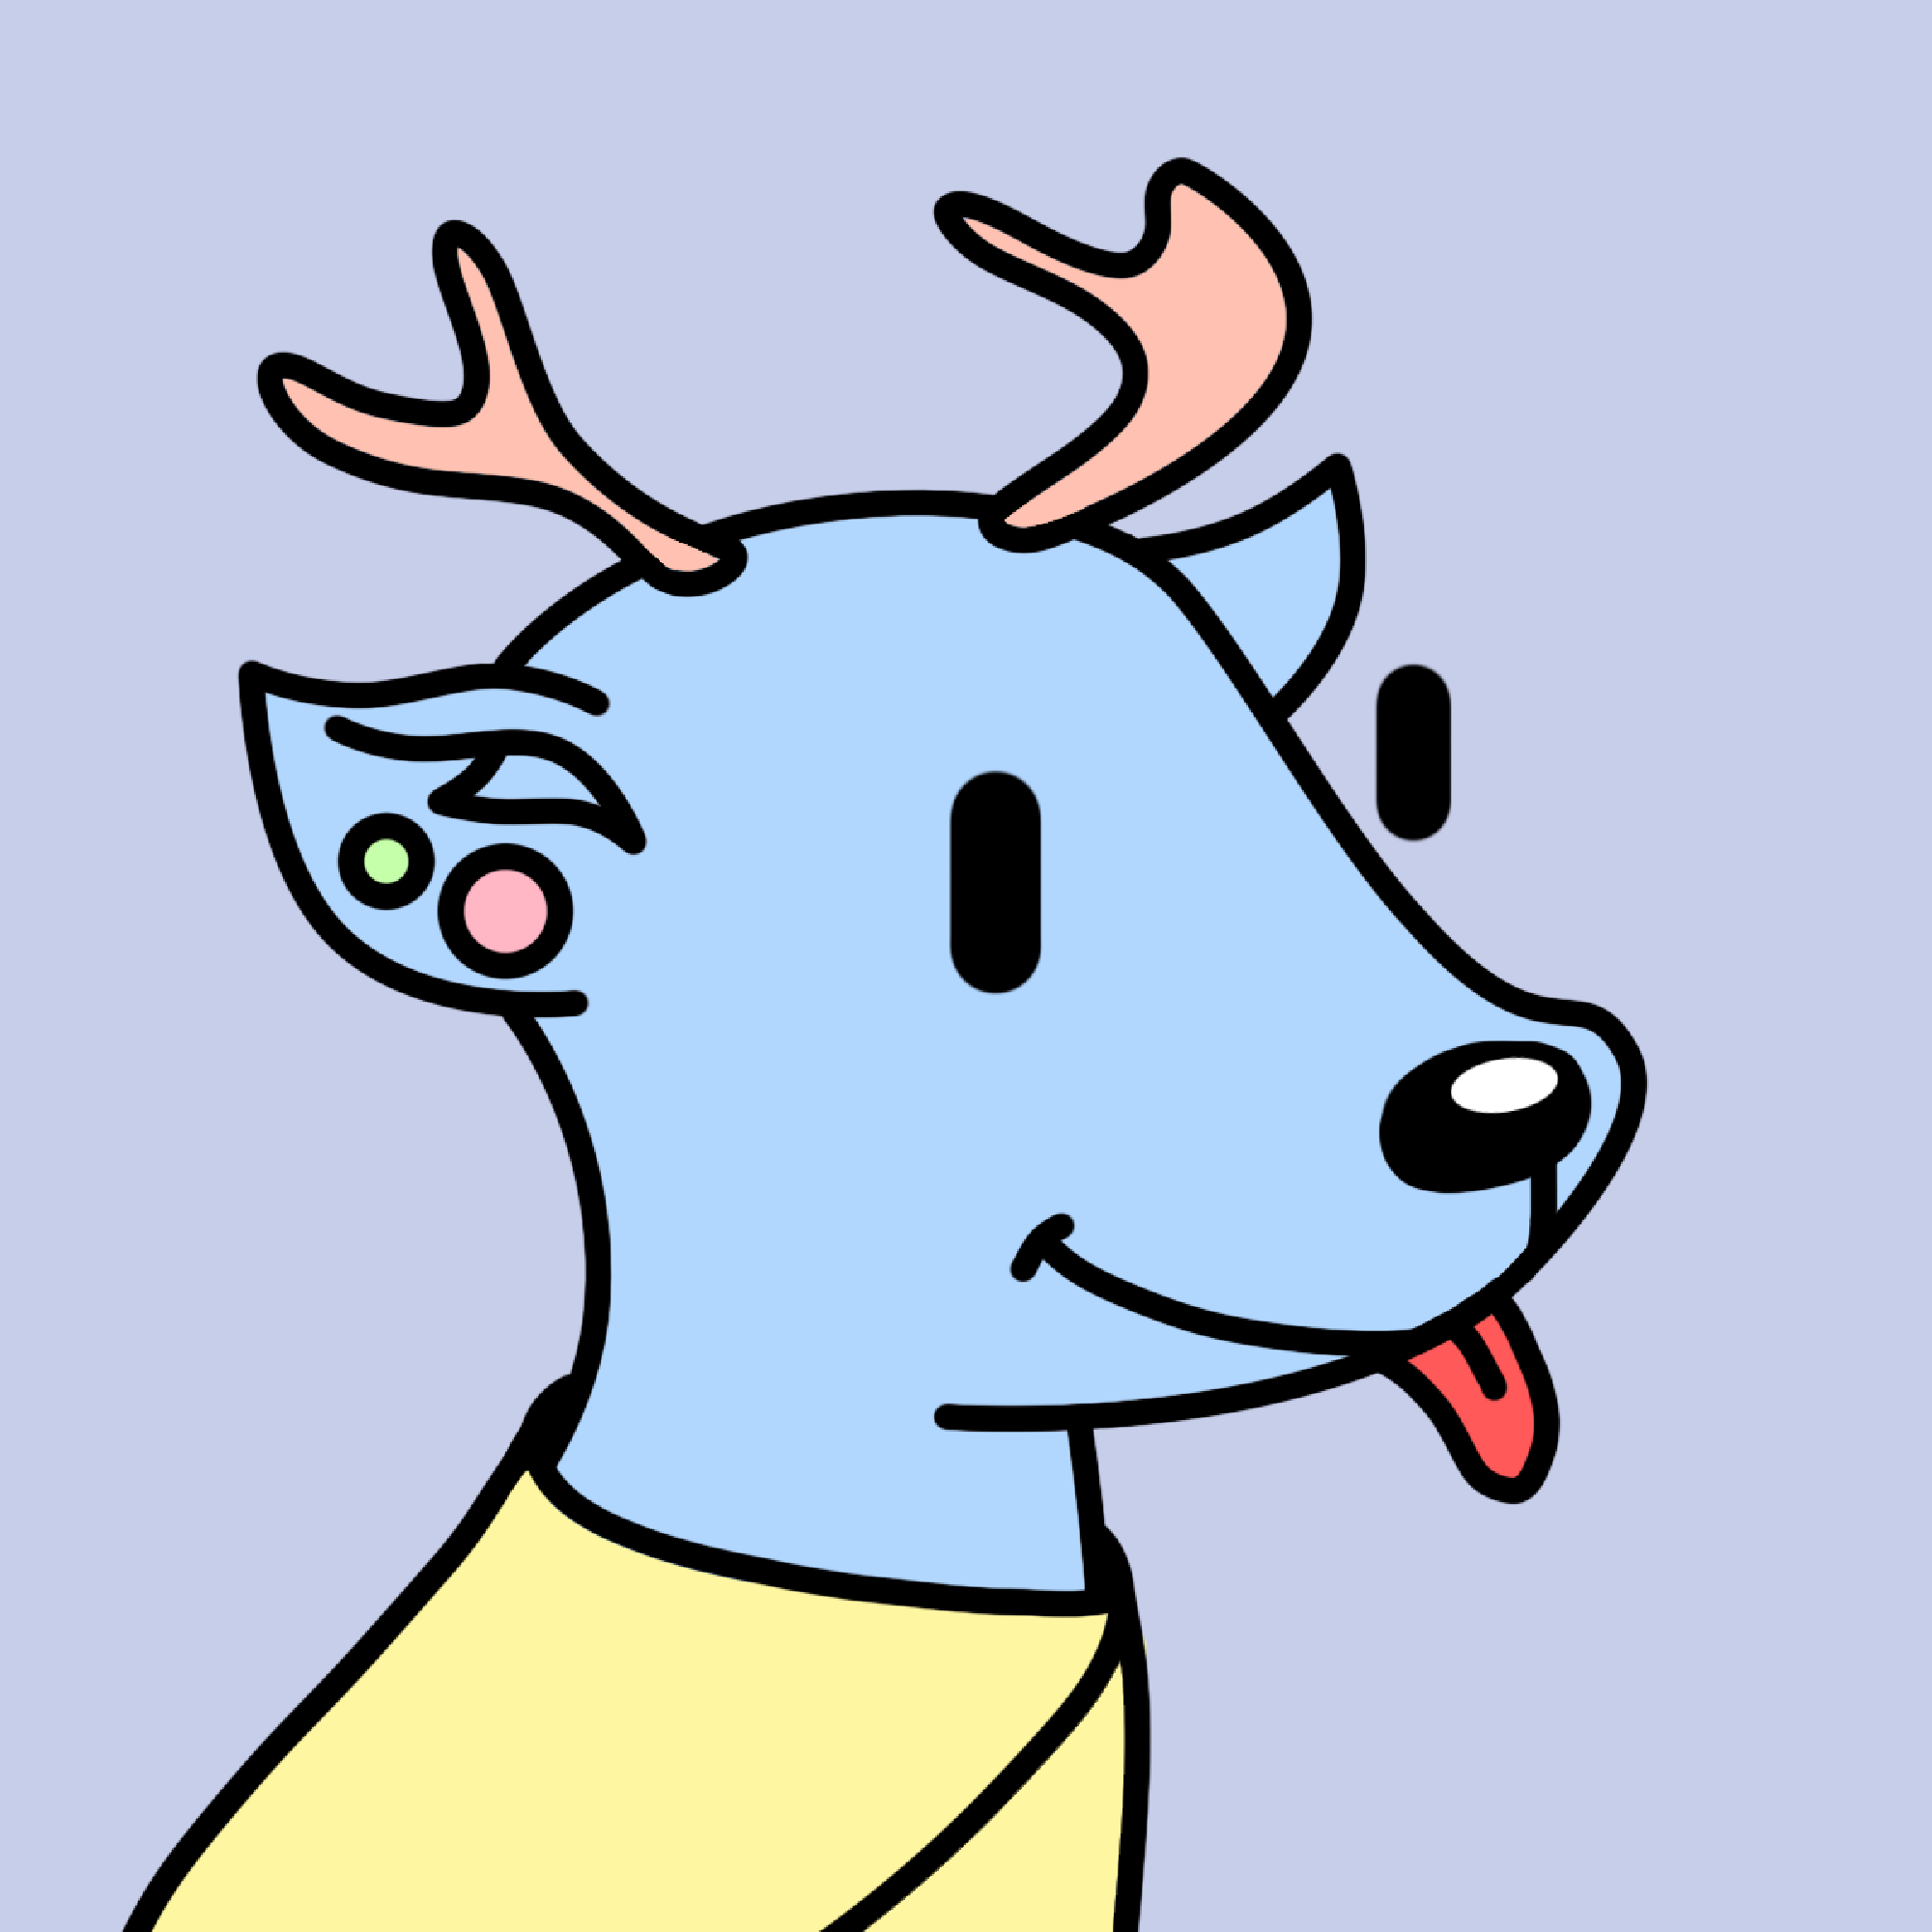 Doodled Deer#4254